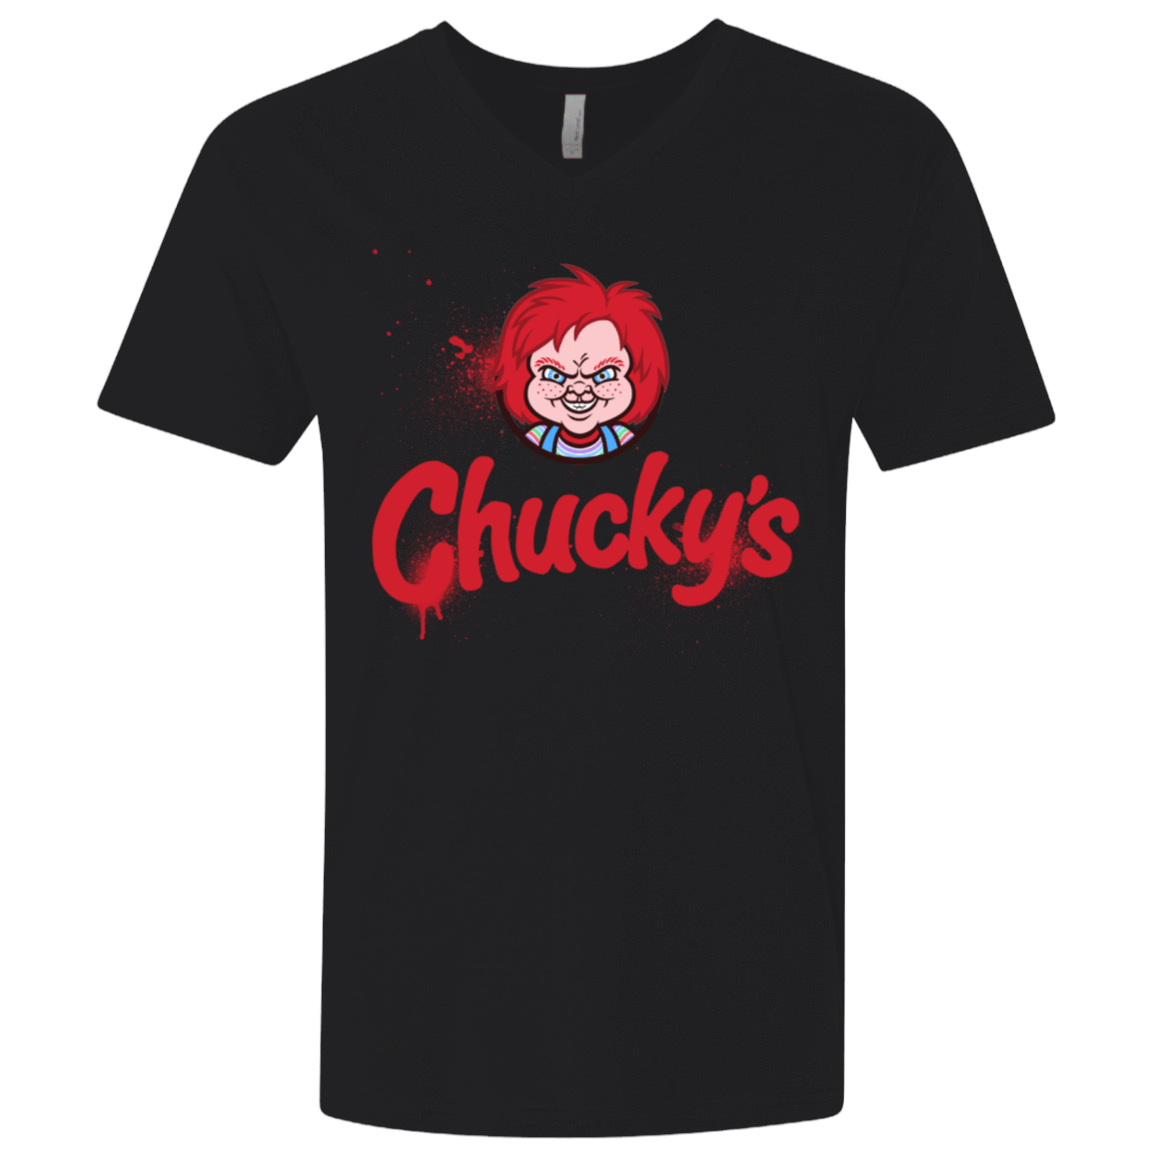 T-Shirts Black / X-Small Chuckys Logo Men's Premium V-Neck